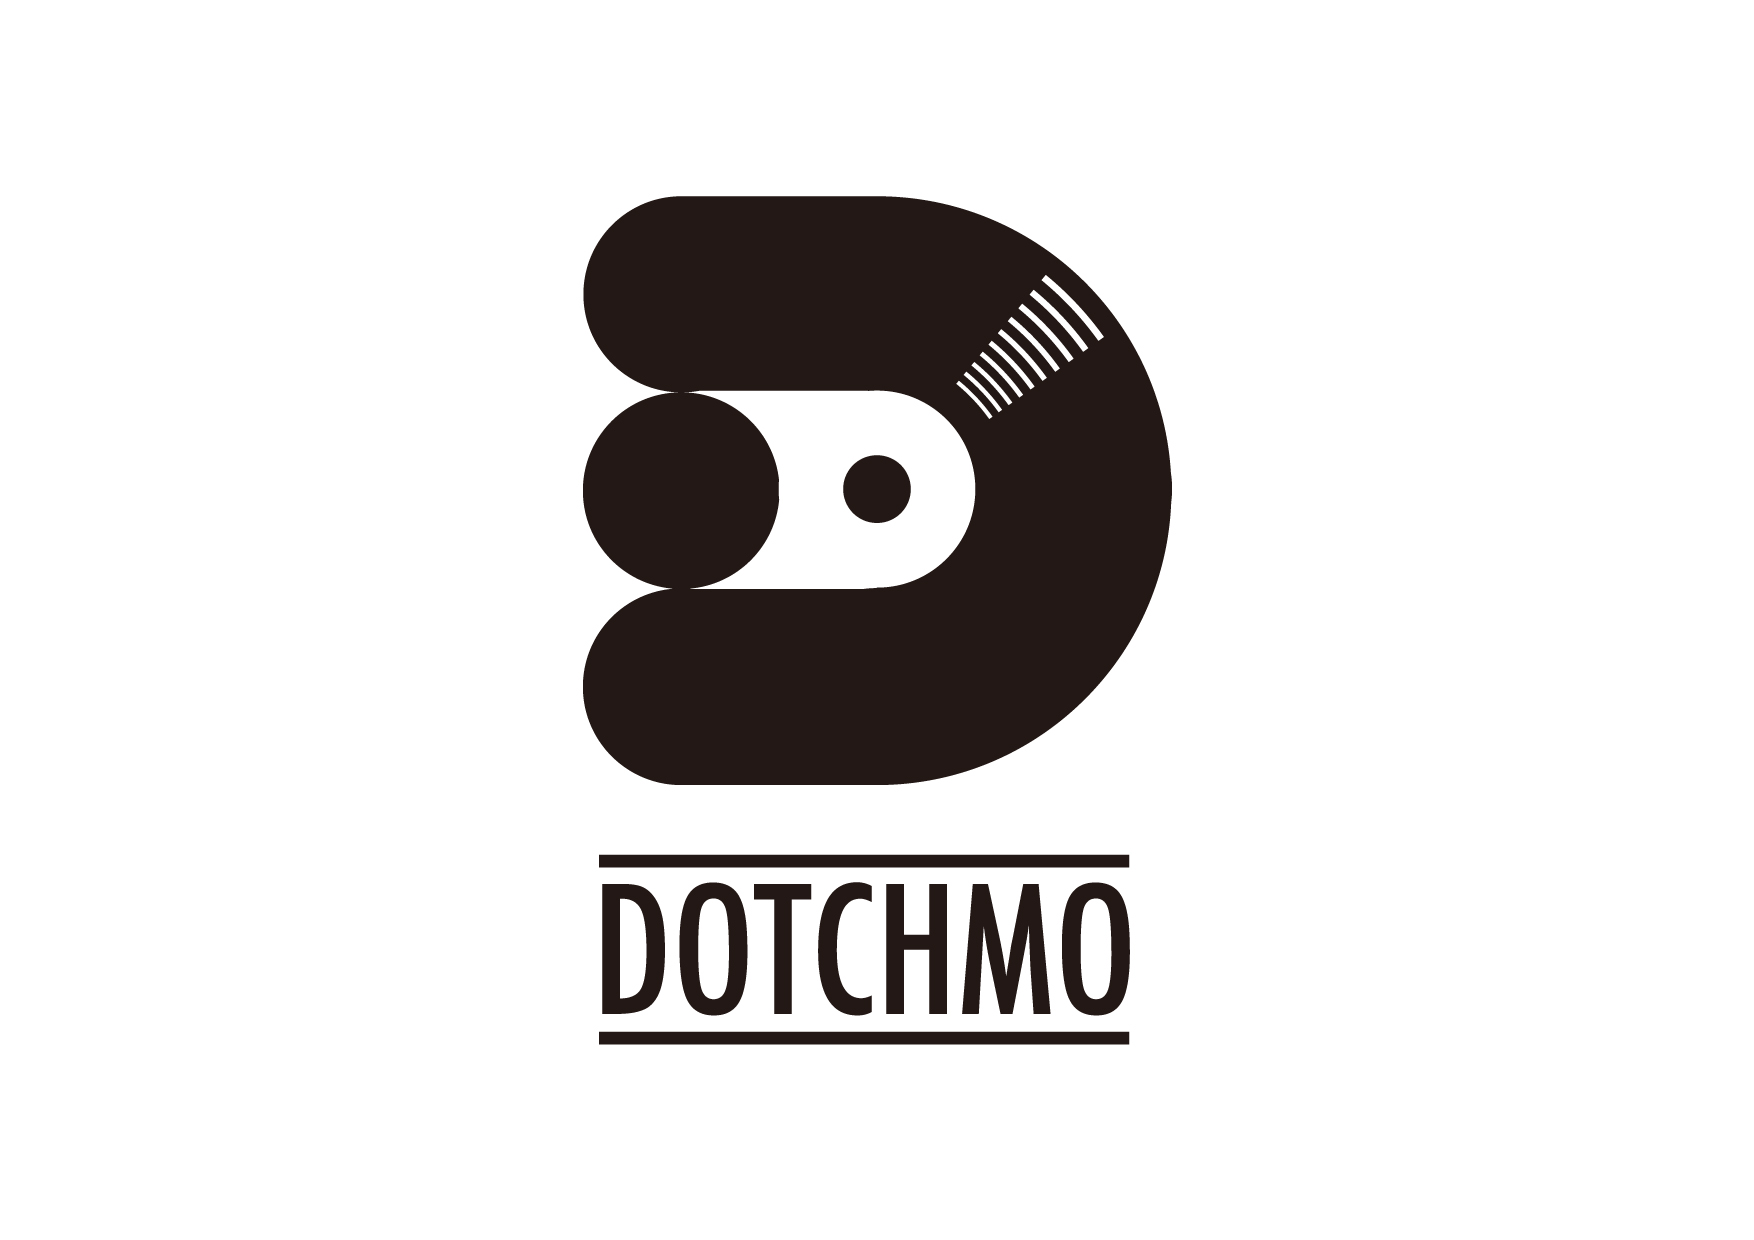 Dotchmo logo.jpg